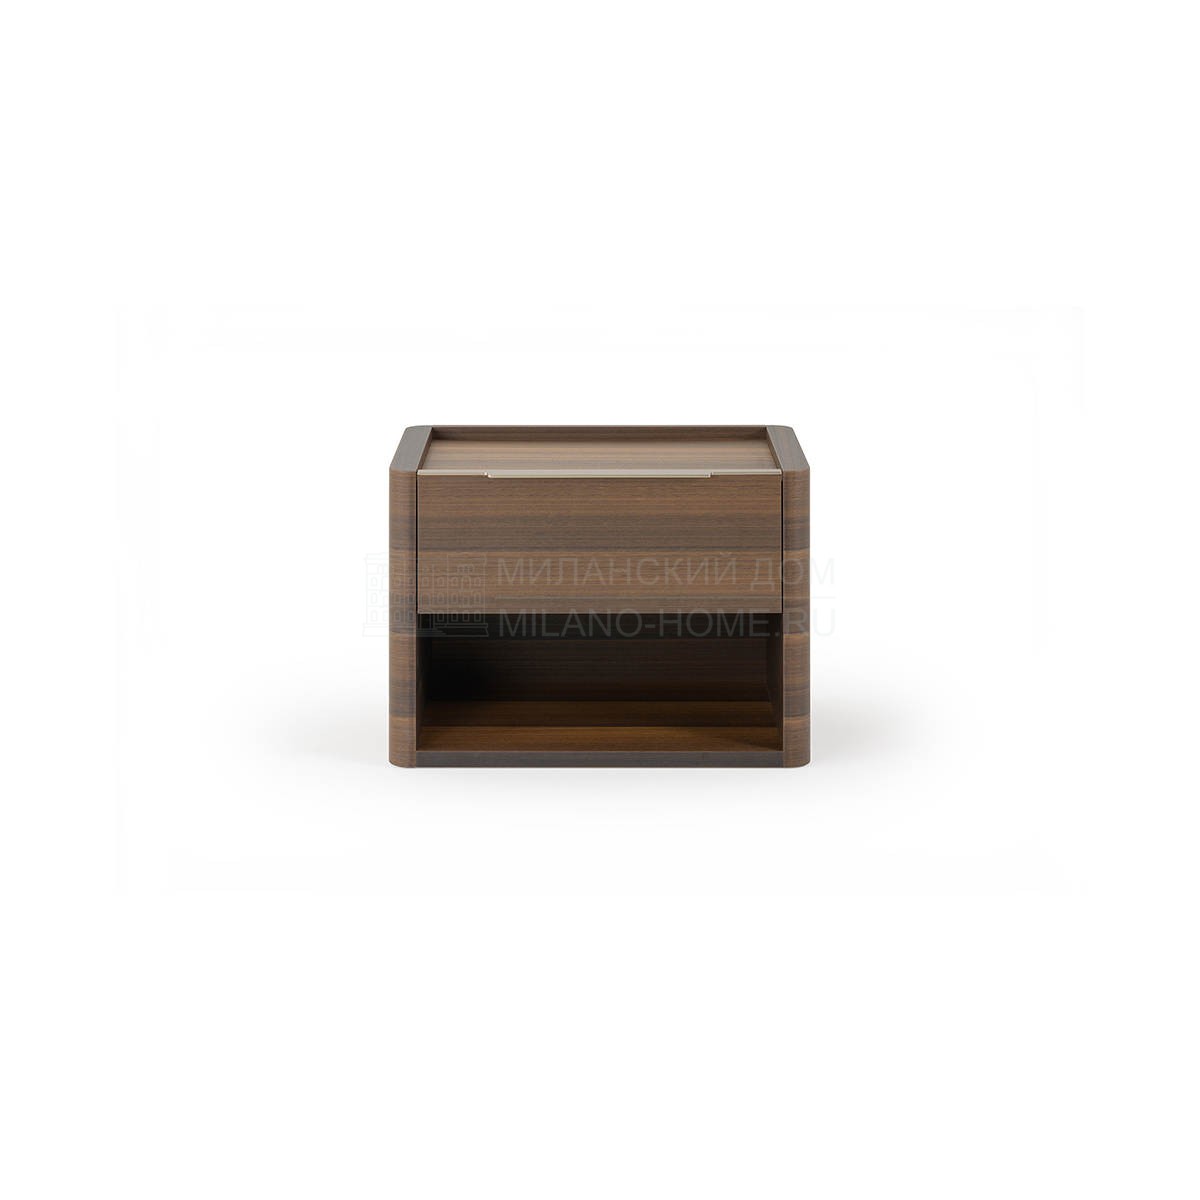 Тумбочка Domus cube bedside table из Италии фабрики TURRI